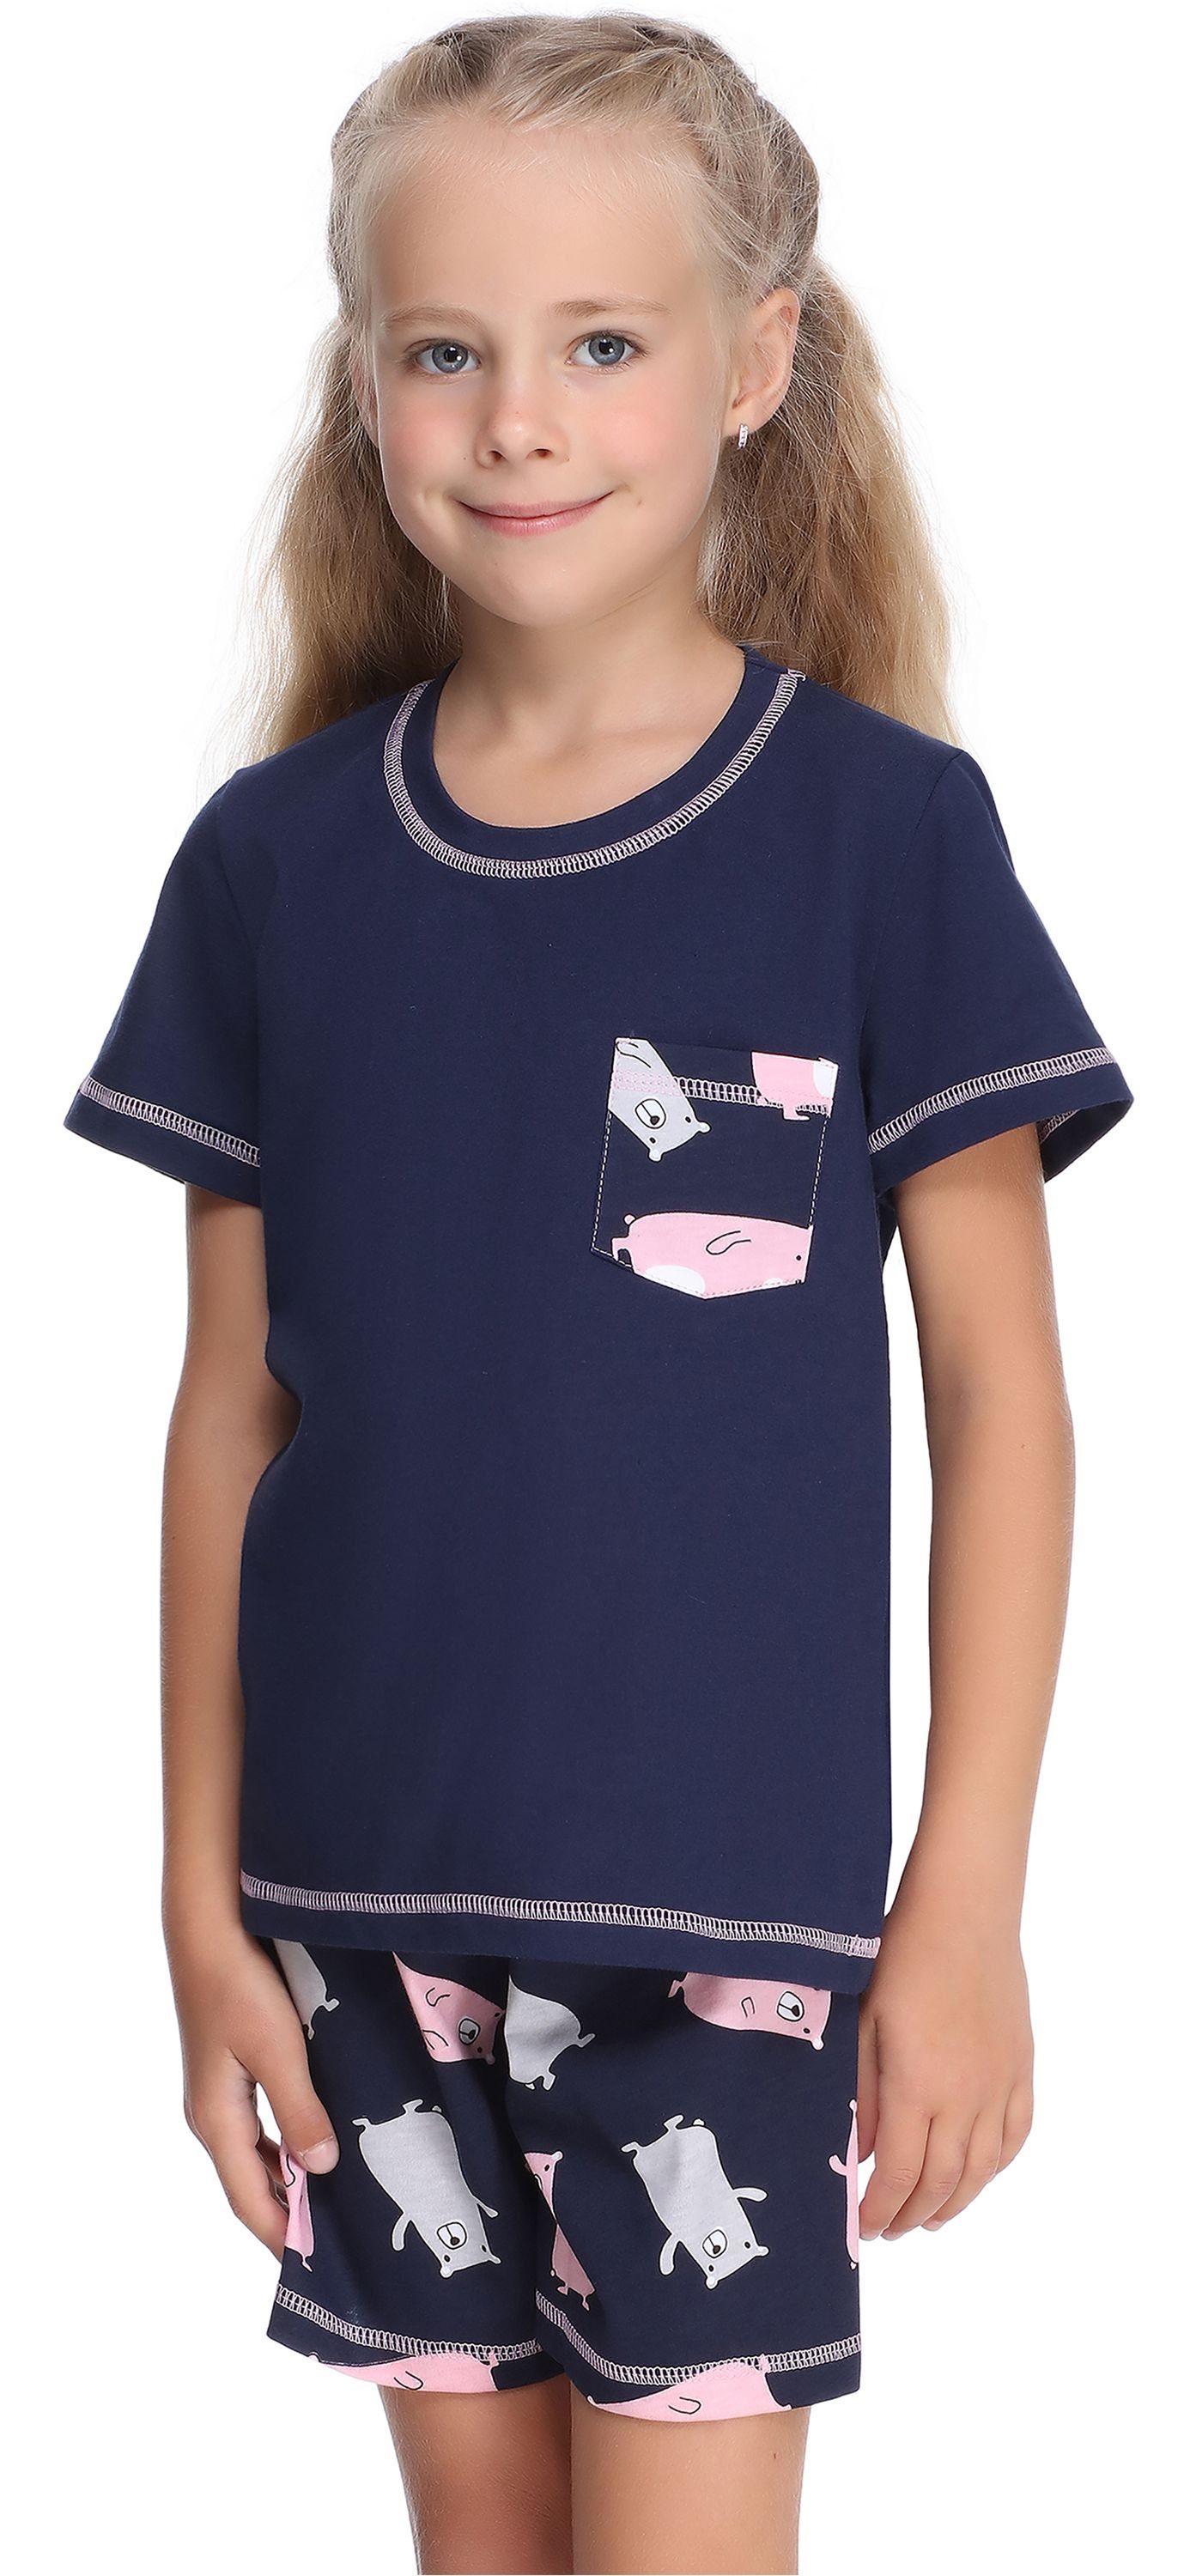 Marineblau/Teddybär Style aus Mädchen Baumwolle Schlafanzug MS10-292 Kurz Schlafanzüge Merry Pyjama Set